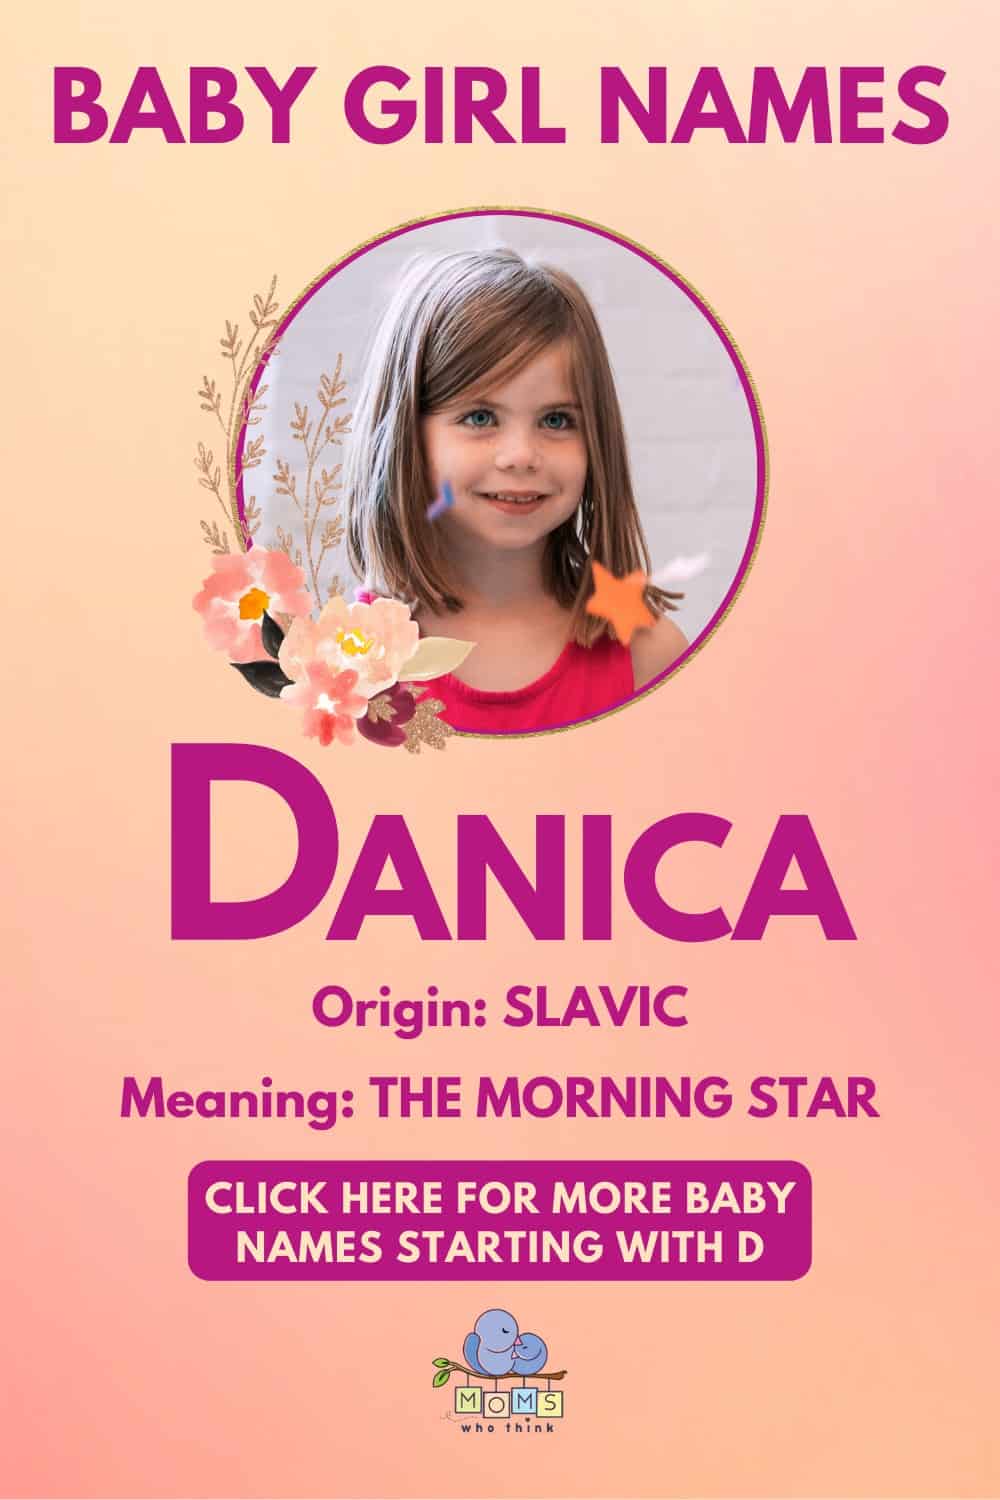 Baby girl name meanings - Danica